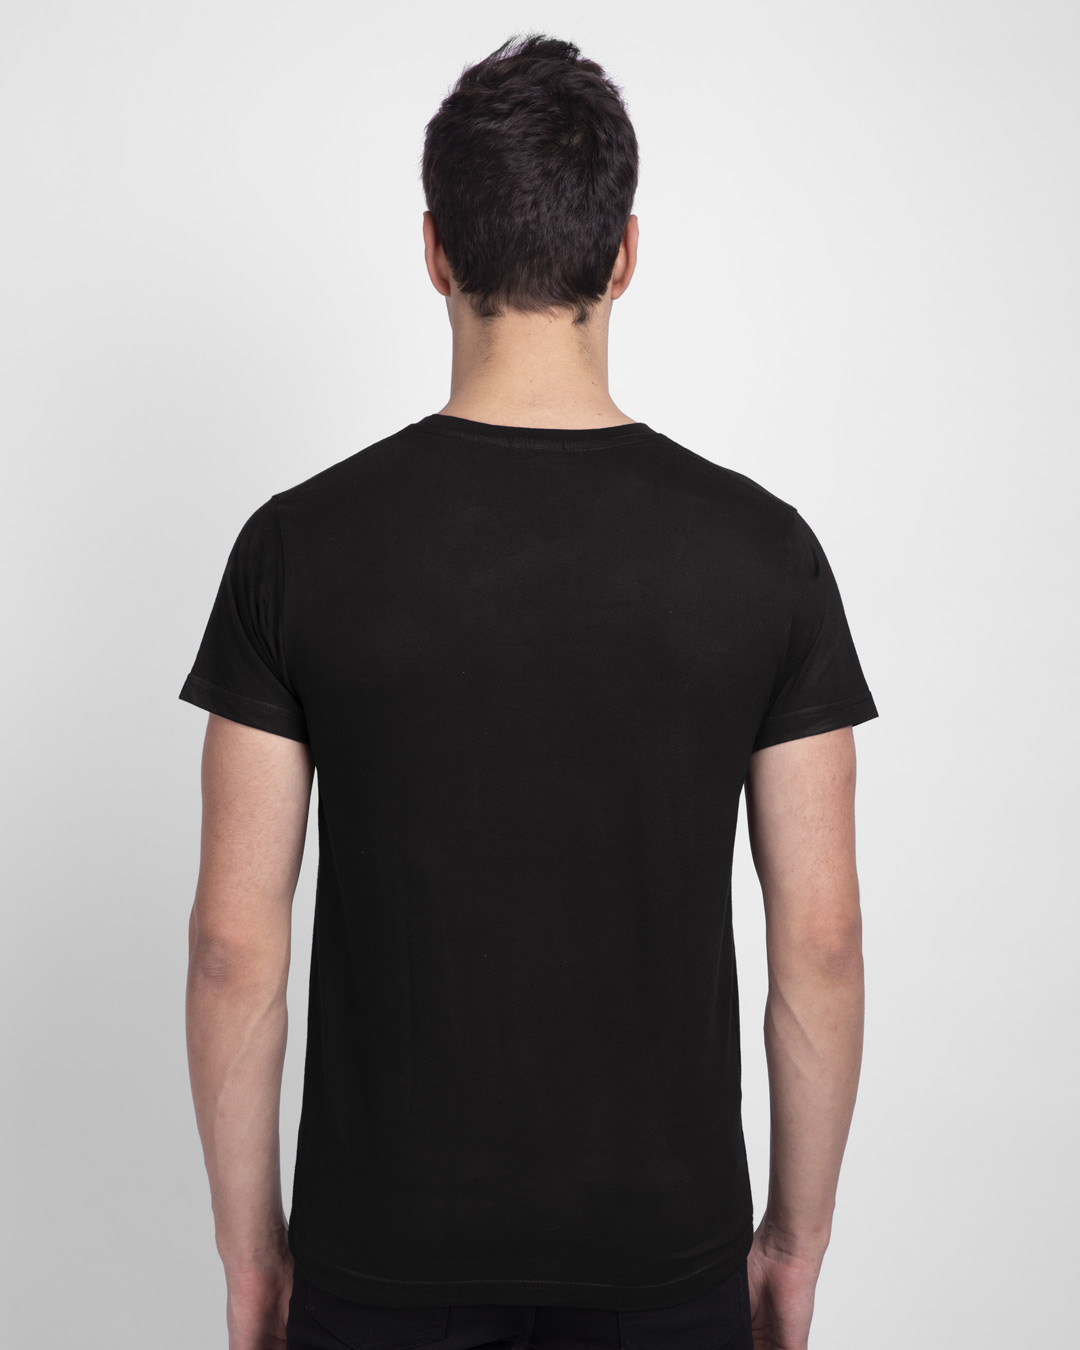 Shop Not An Option Half Sleeve T-Shirt Black-Back